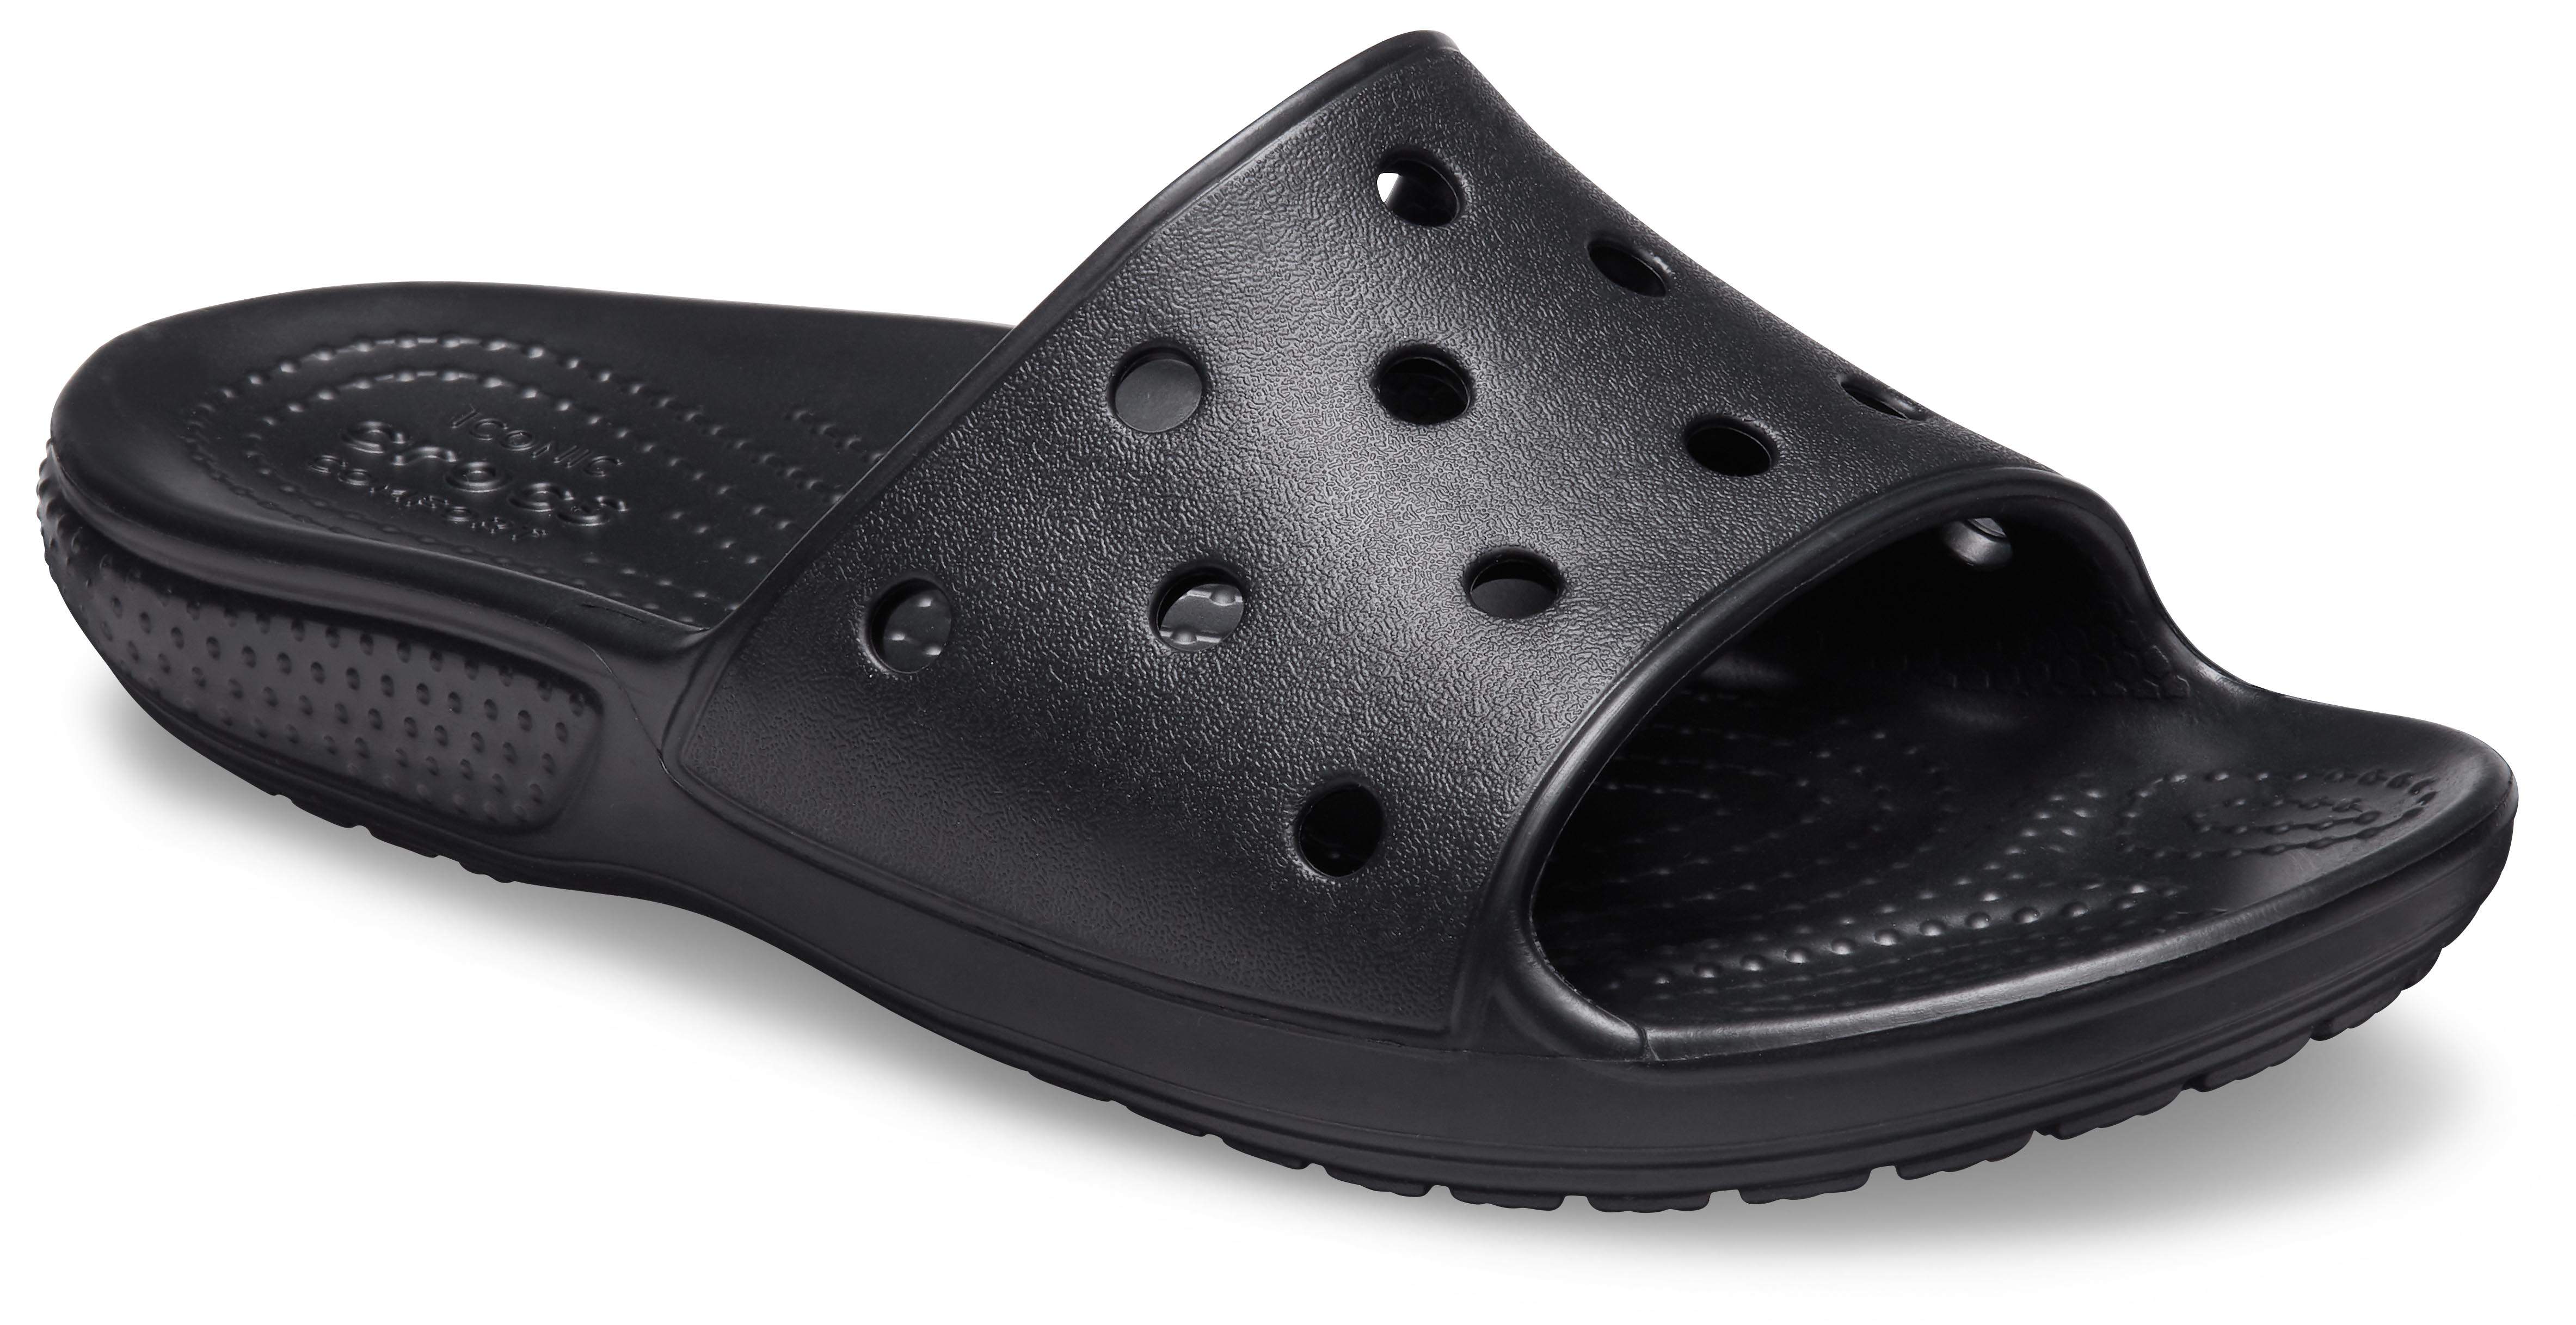 crocs slide sandals